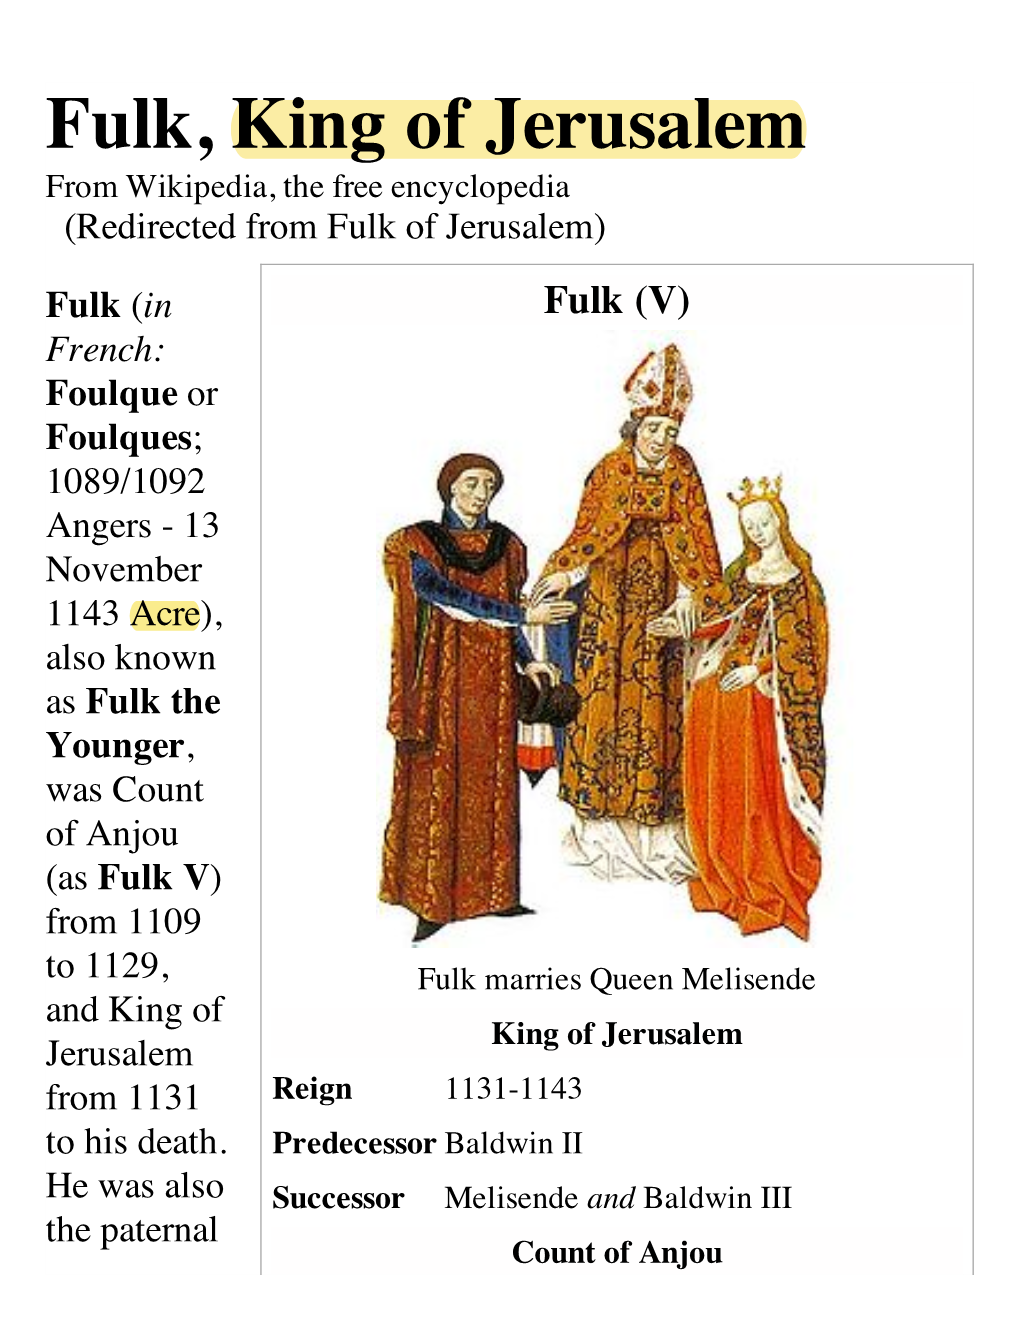 Fulk, King of Jerusalem from Wikipedia, the Free Encyclopedia (Redirected from Fulk of Jerusalem)